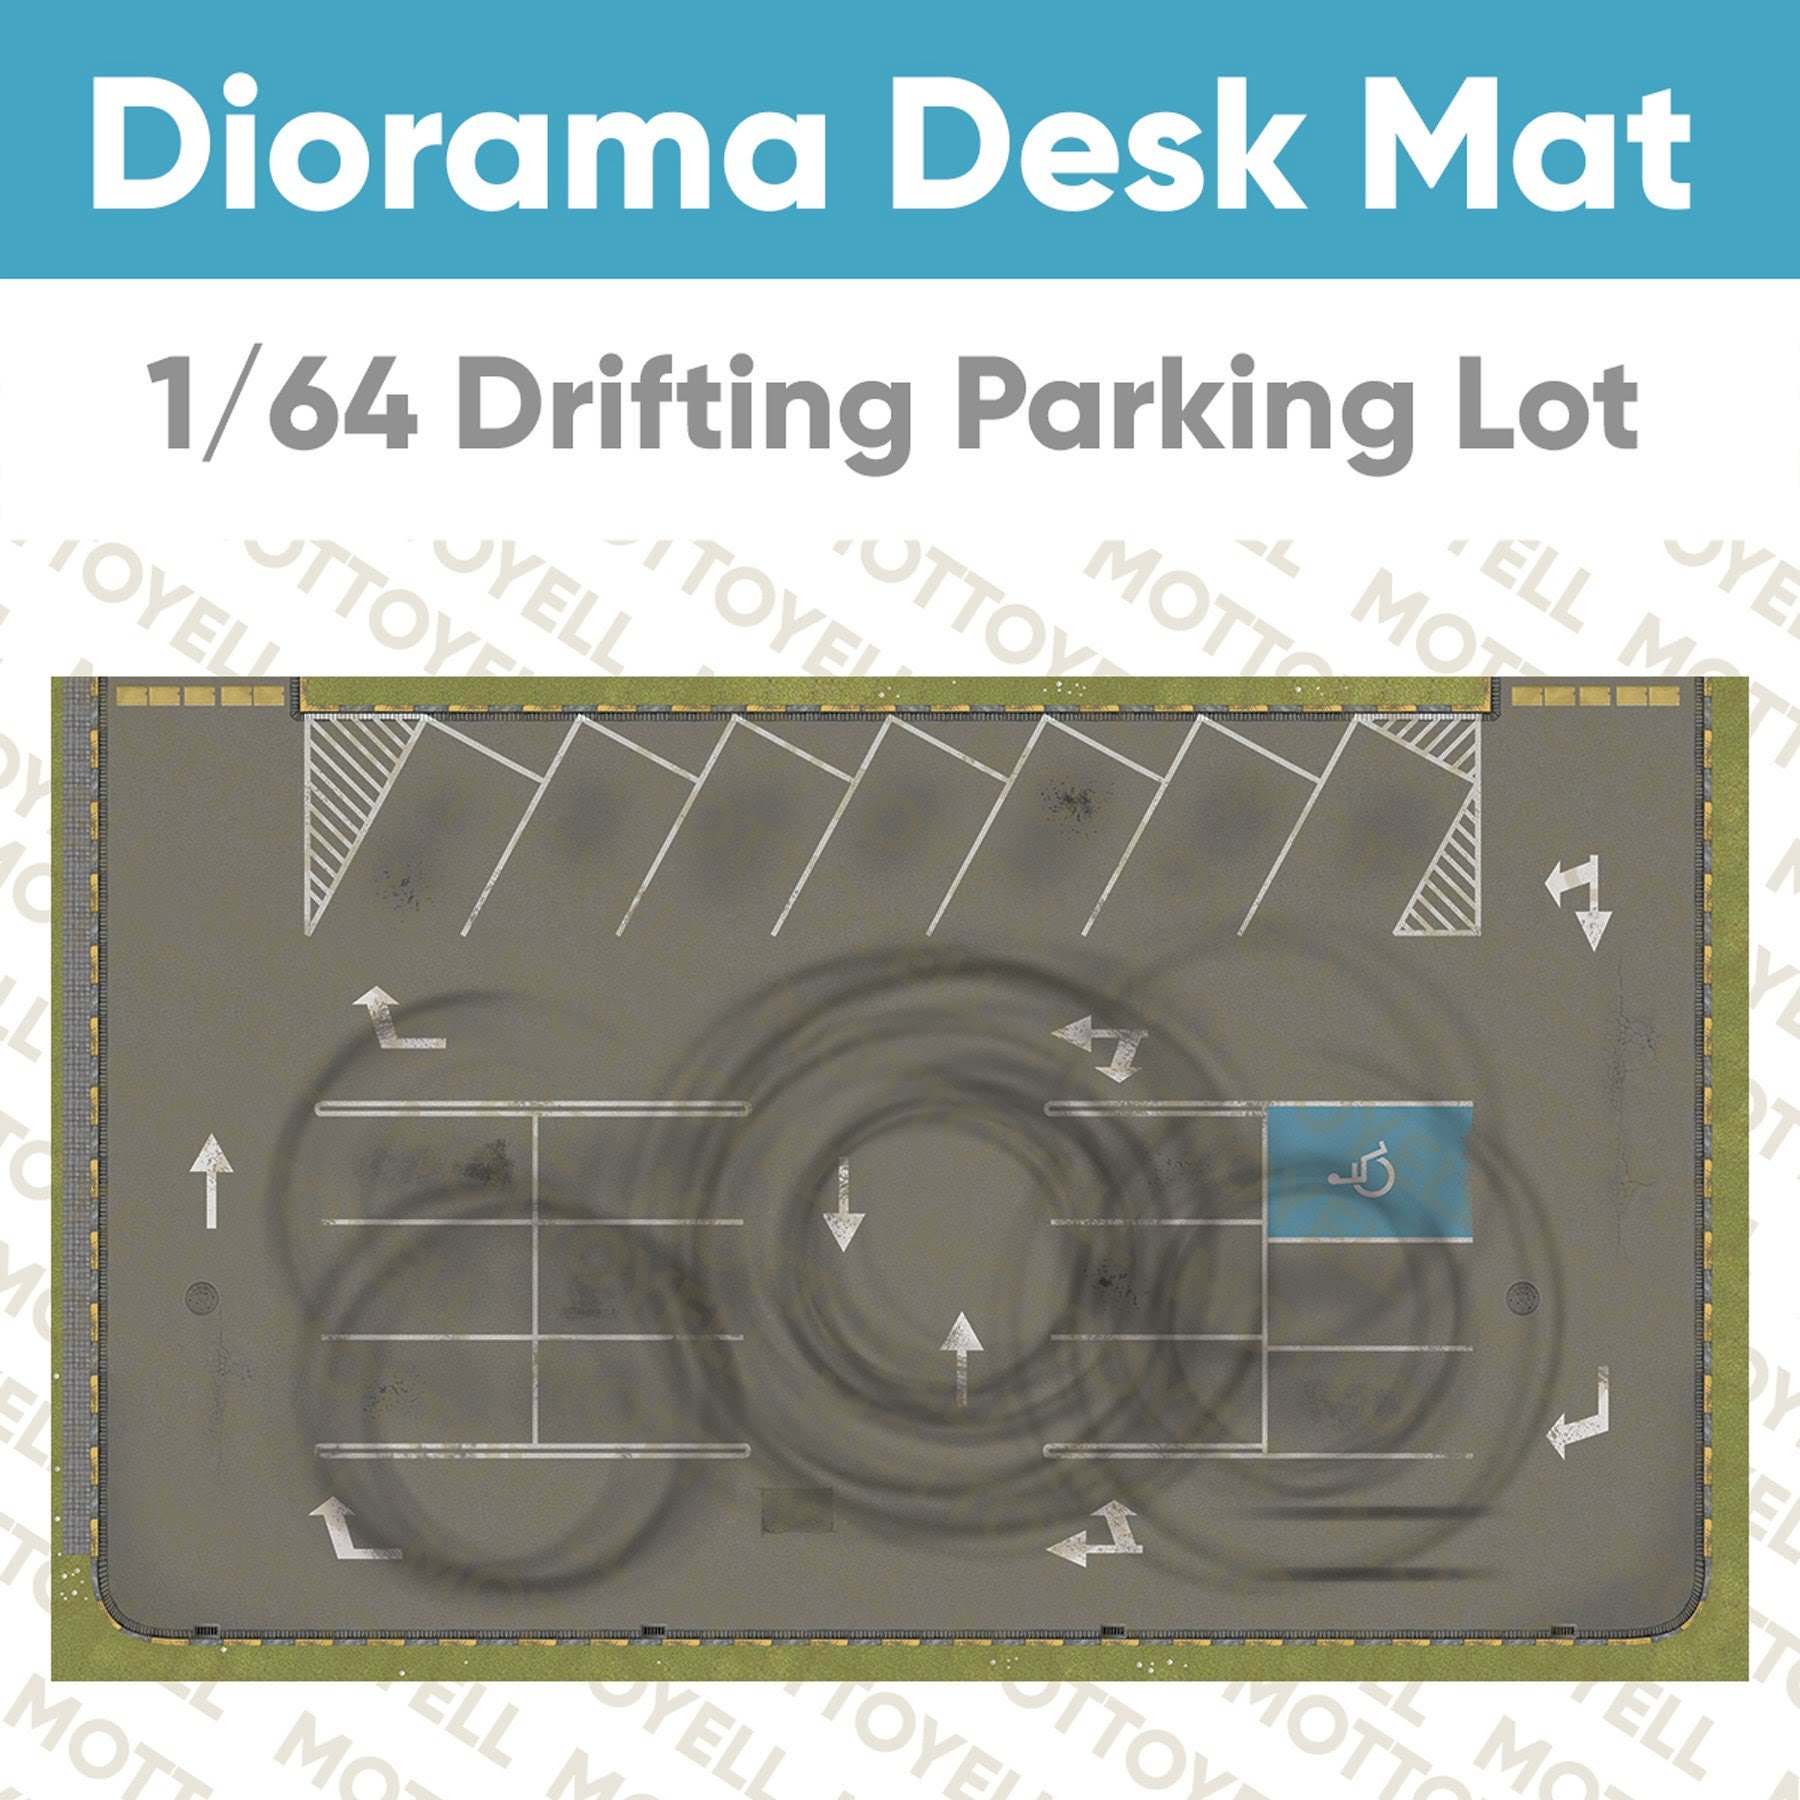 Printable Parking Lot Diorama